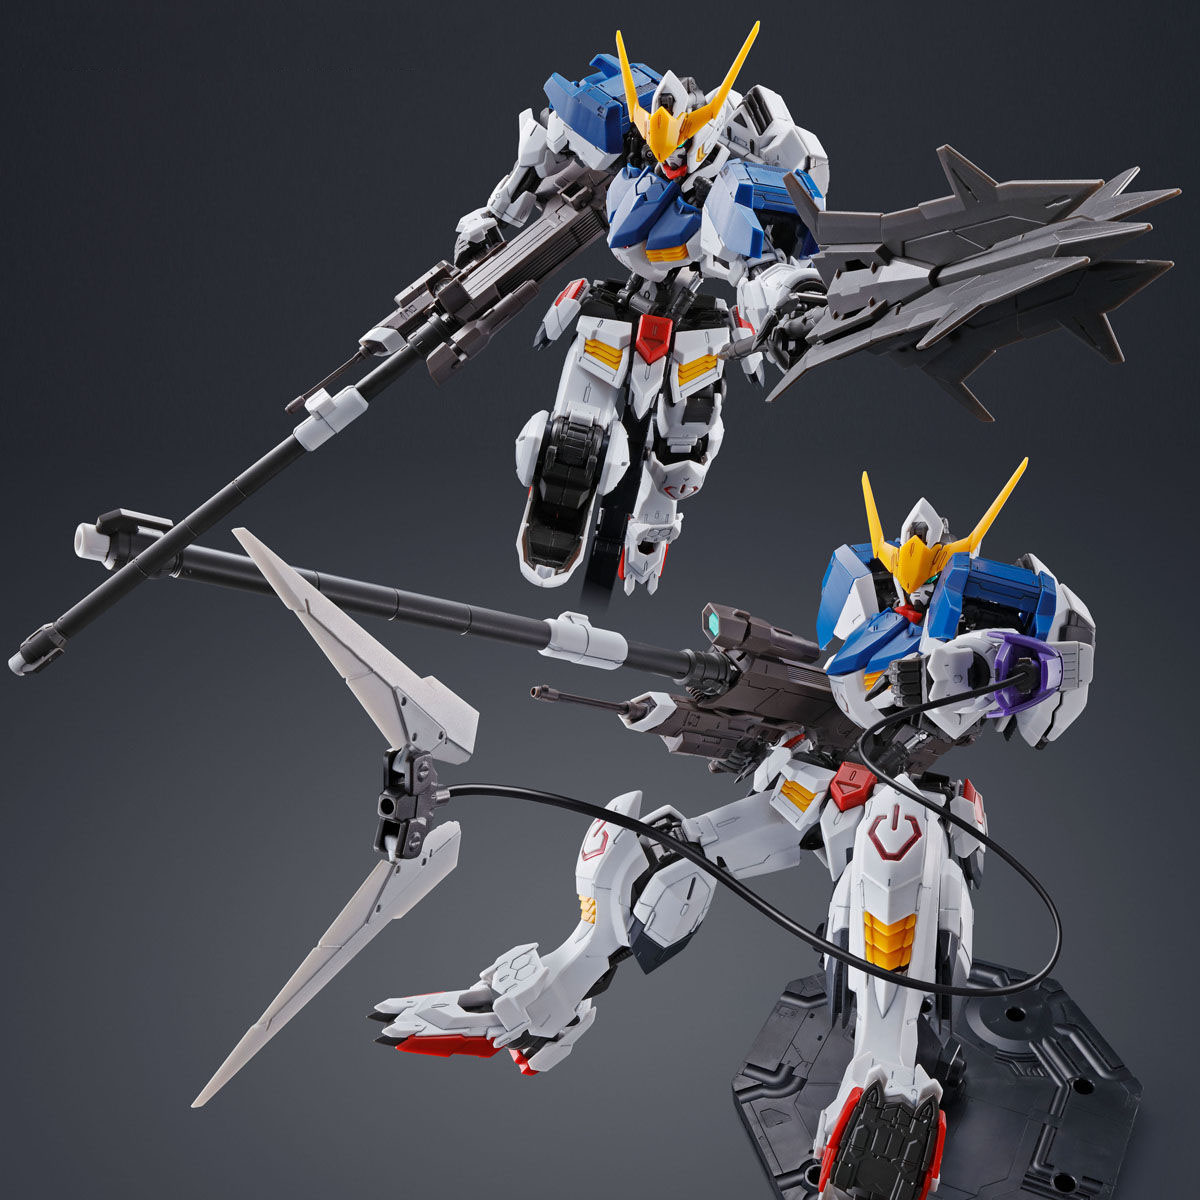 Bandai MG 1/100 Gundam Barbados Expansion Parts Set 4573102605382 for sale online